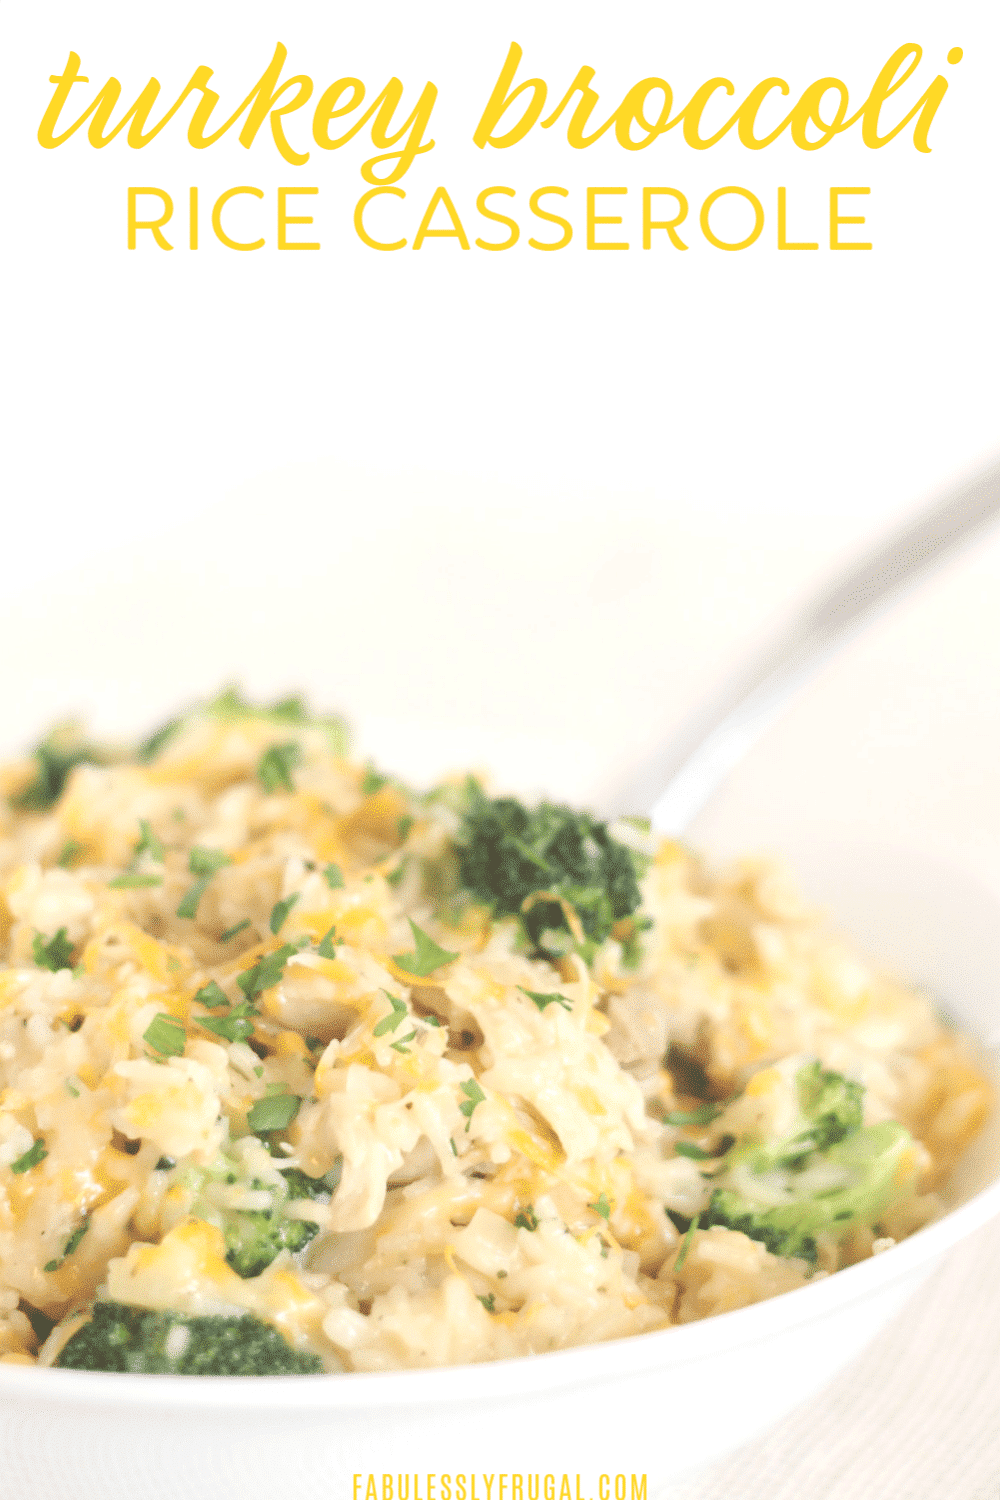 Cheesy chicken or turkey broccoli rice casserole